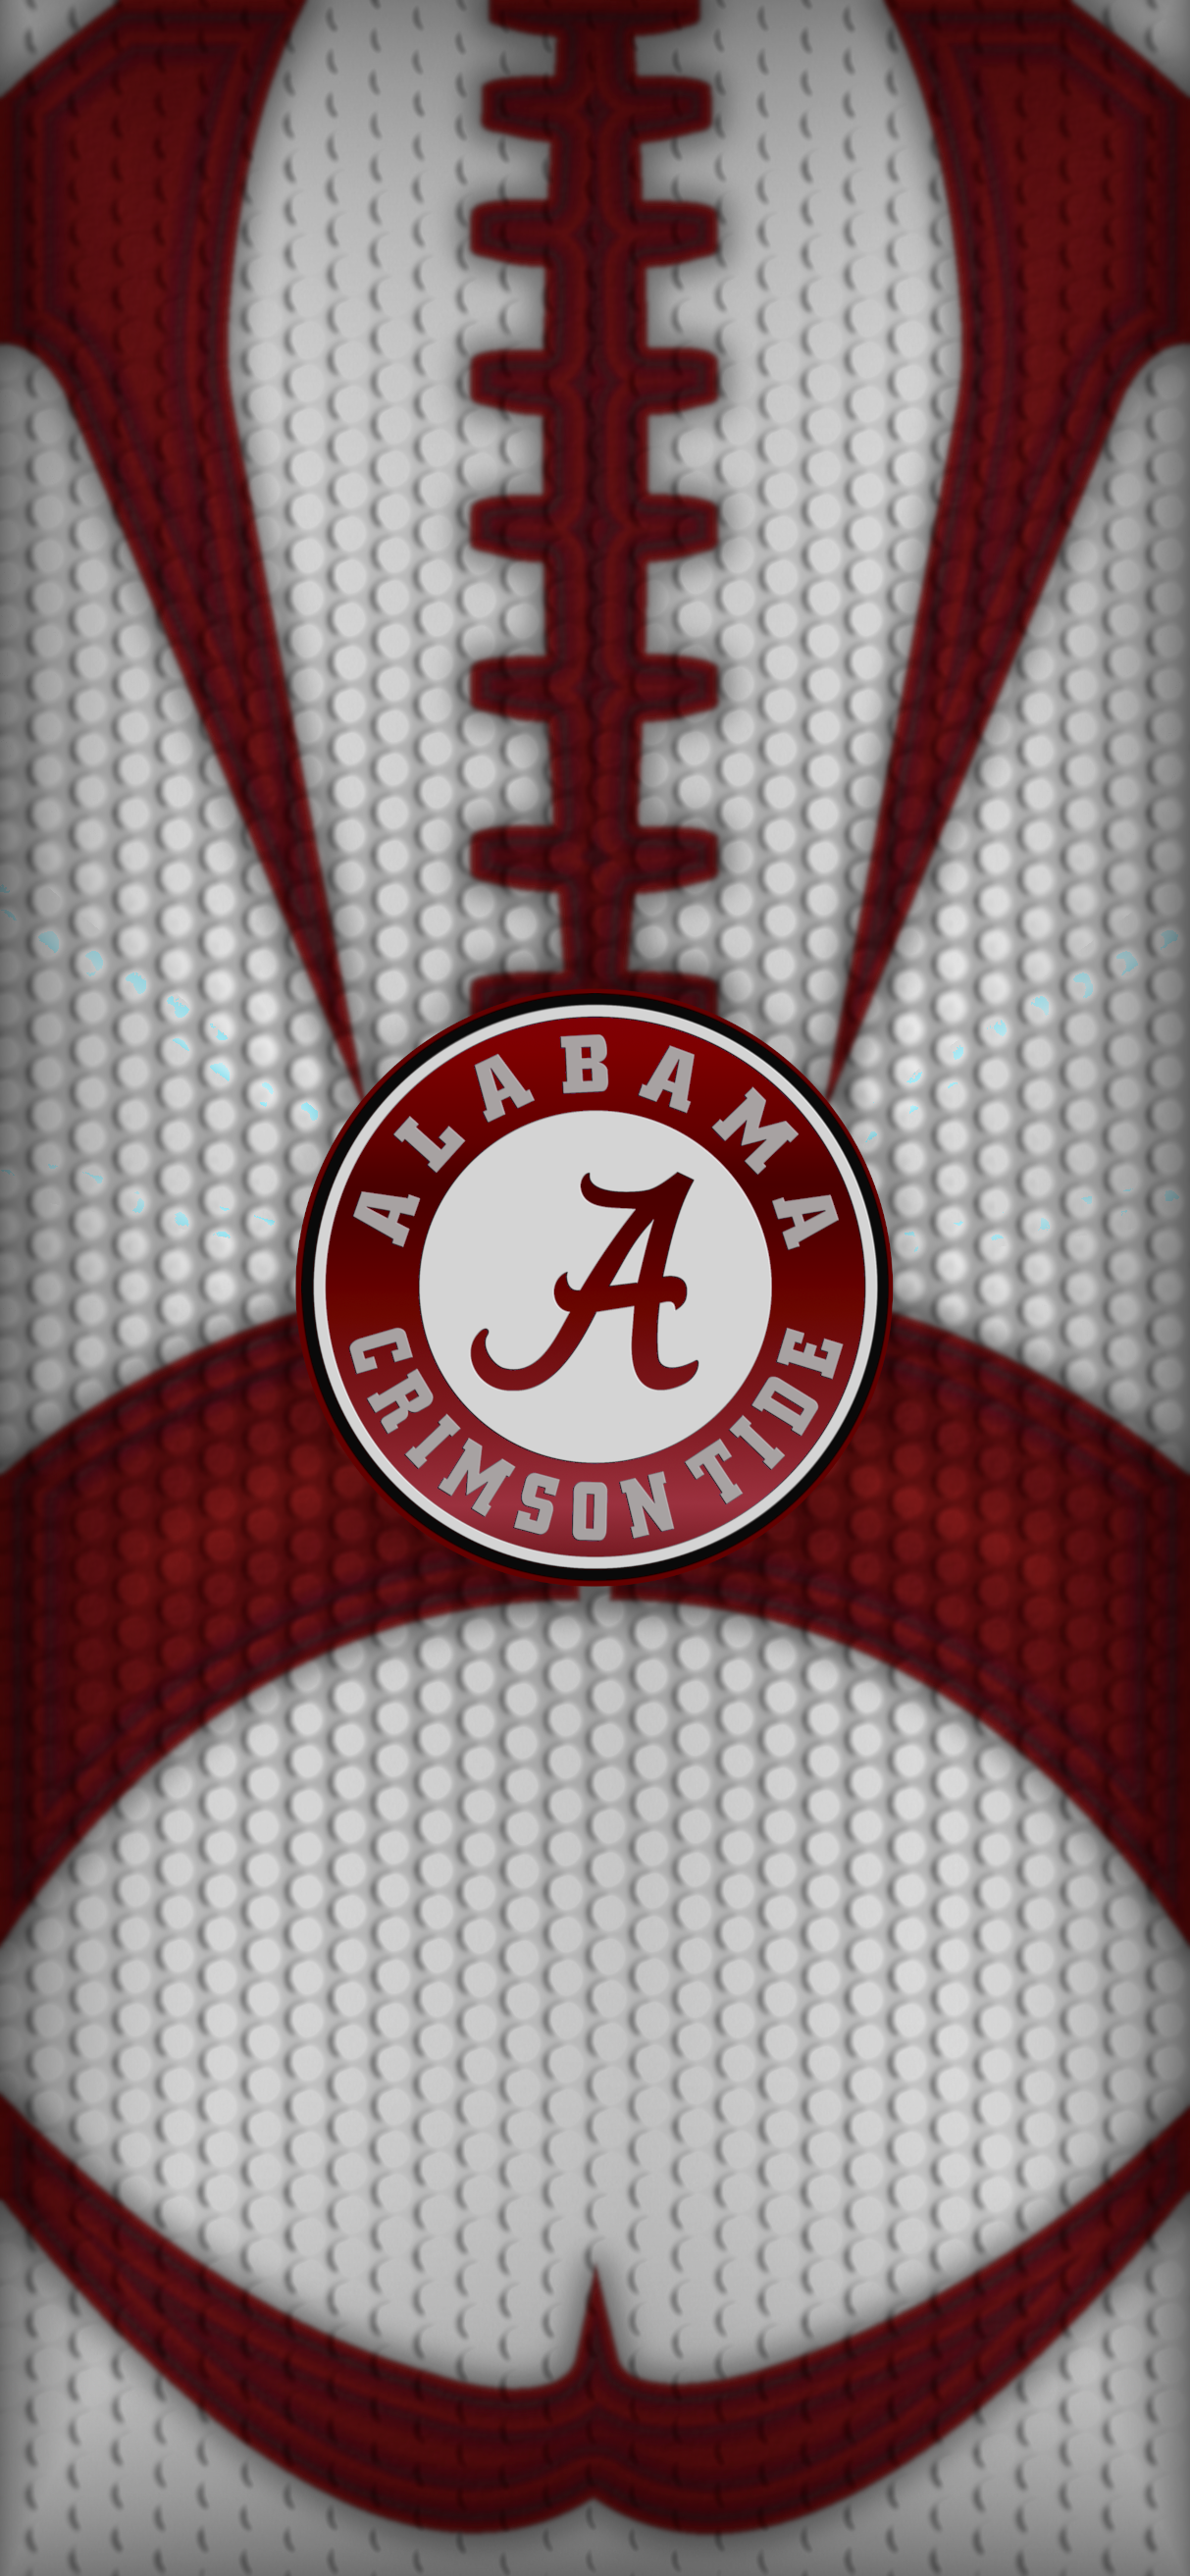 Alabama Crimson Tide Football logo iPhone wallpapers in 2020